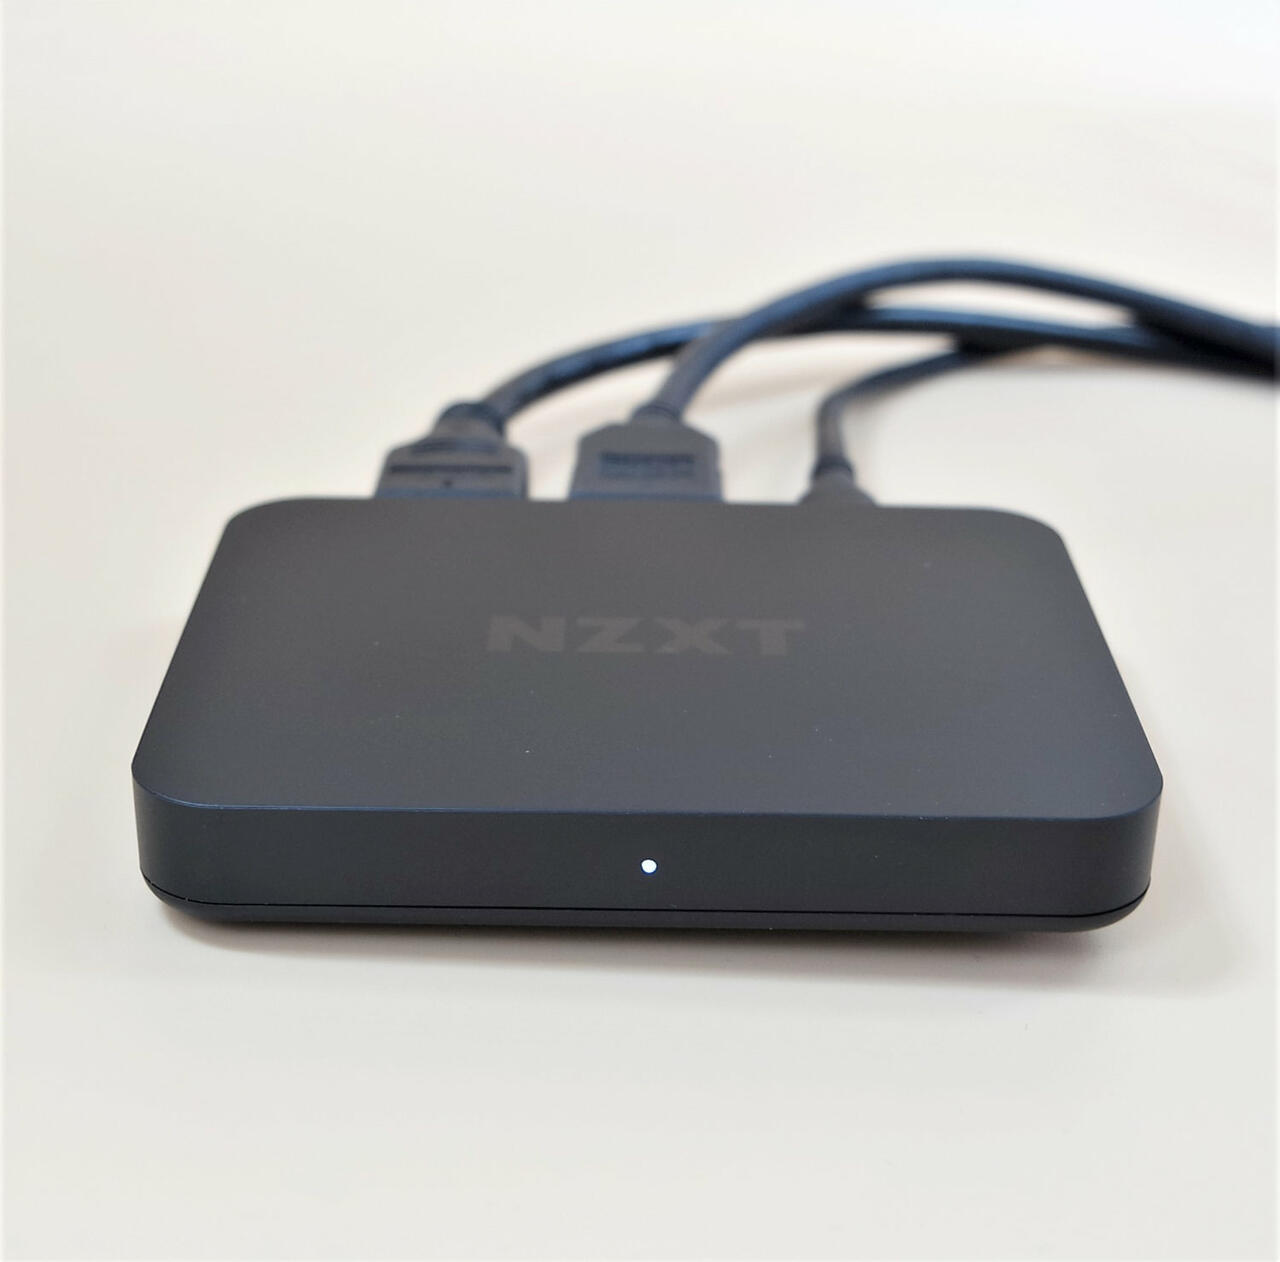 NZXT Signal HD60 Preis & Test